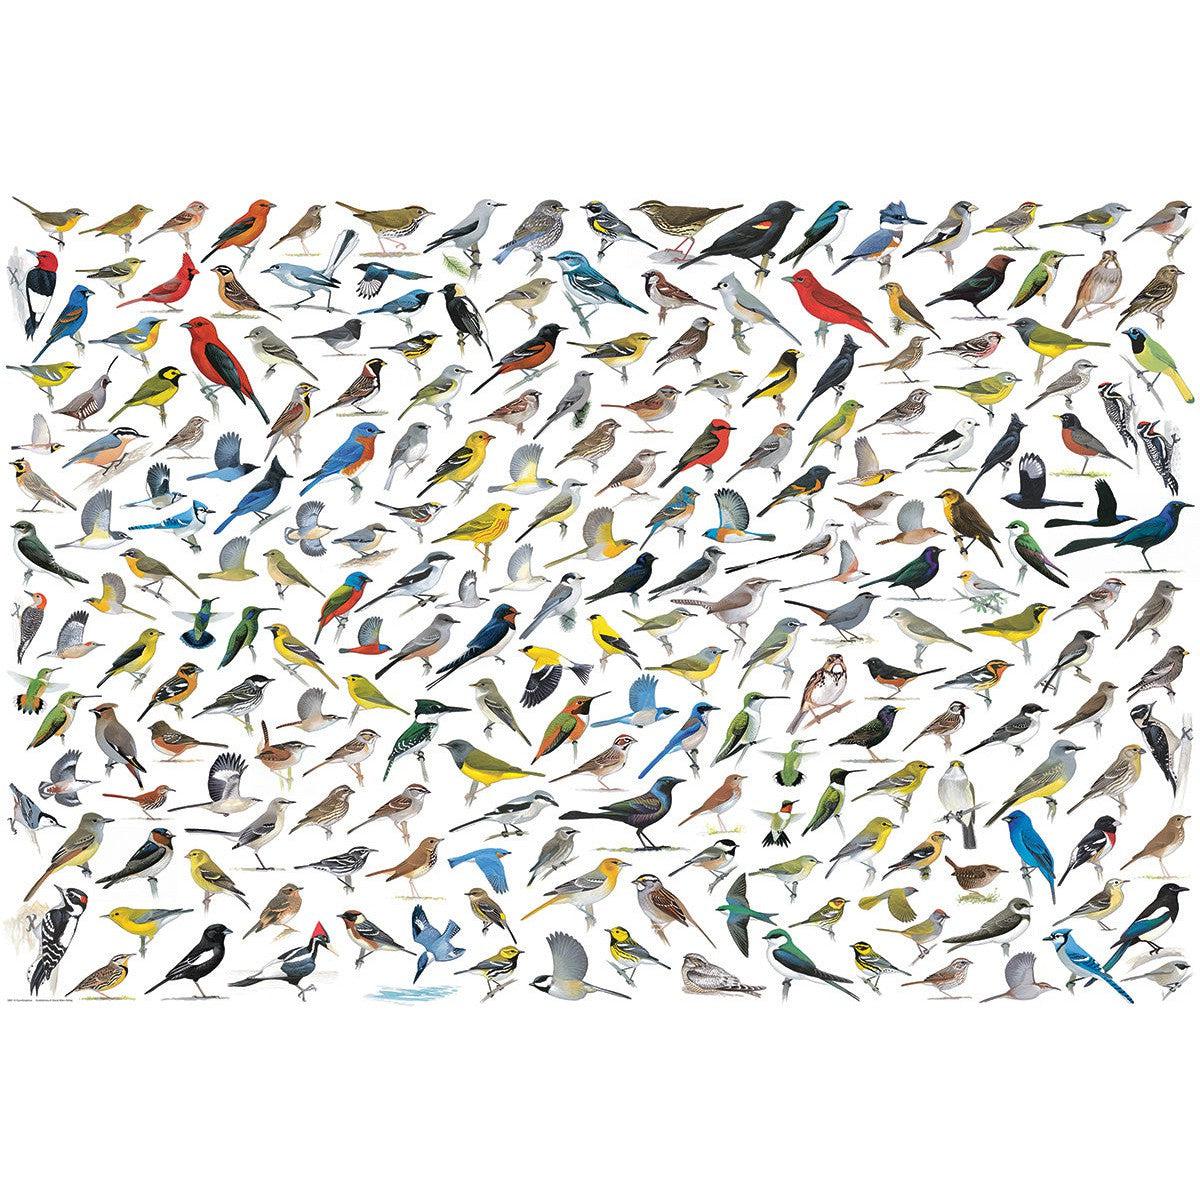 The World of Birds 2000 Piece Jigsaw Puzzle Eurographics